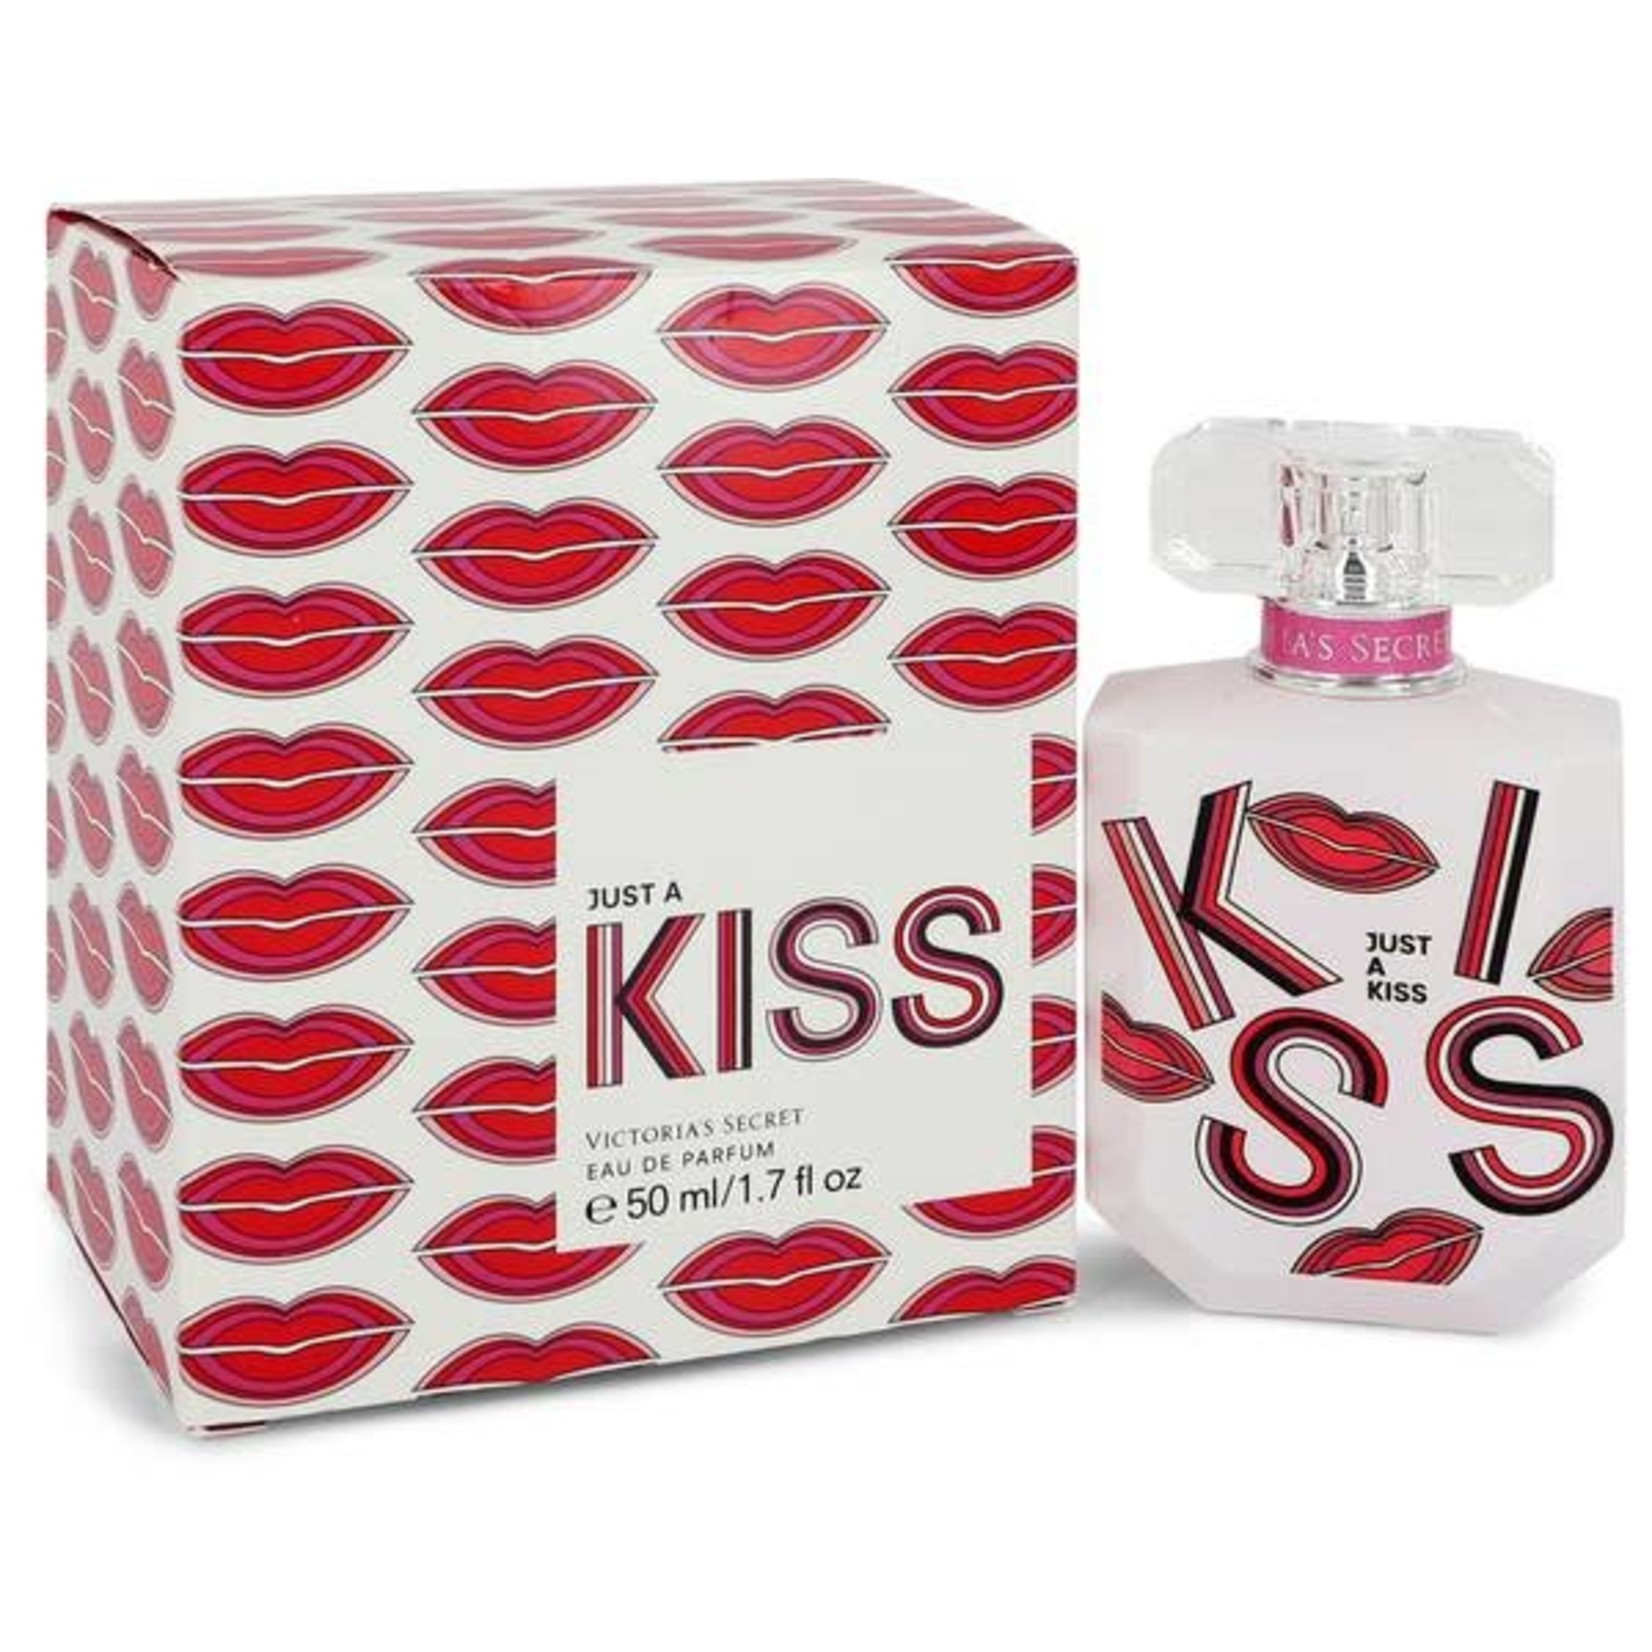 VICTORIA'S SECRET JUST A KISS 1.7 EAU DE PARFUM SPRAY - Desnudo